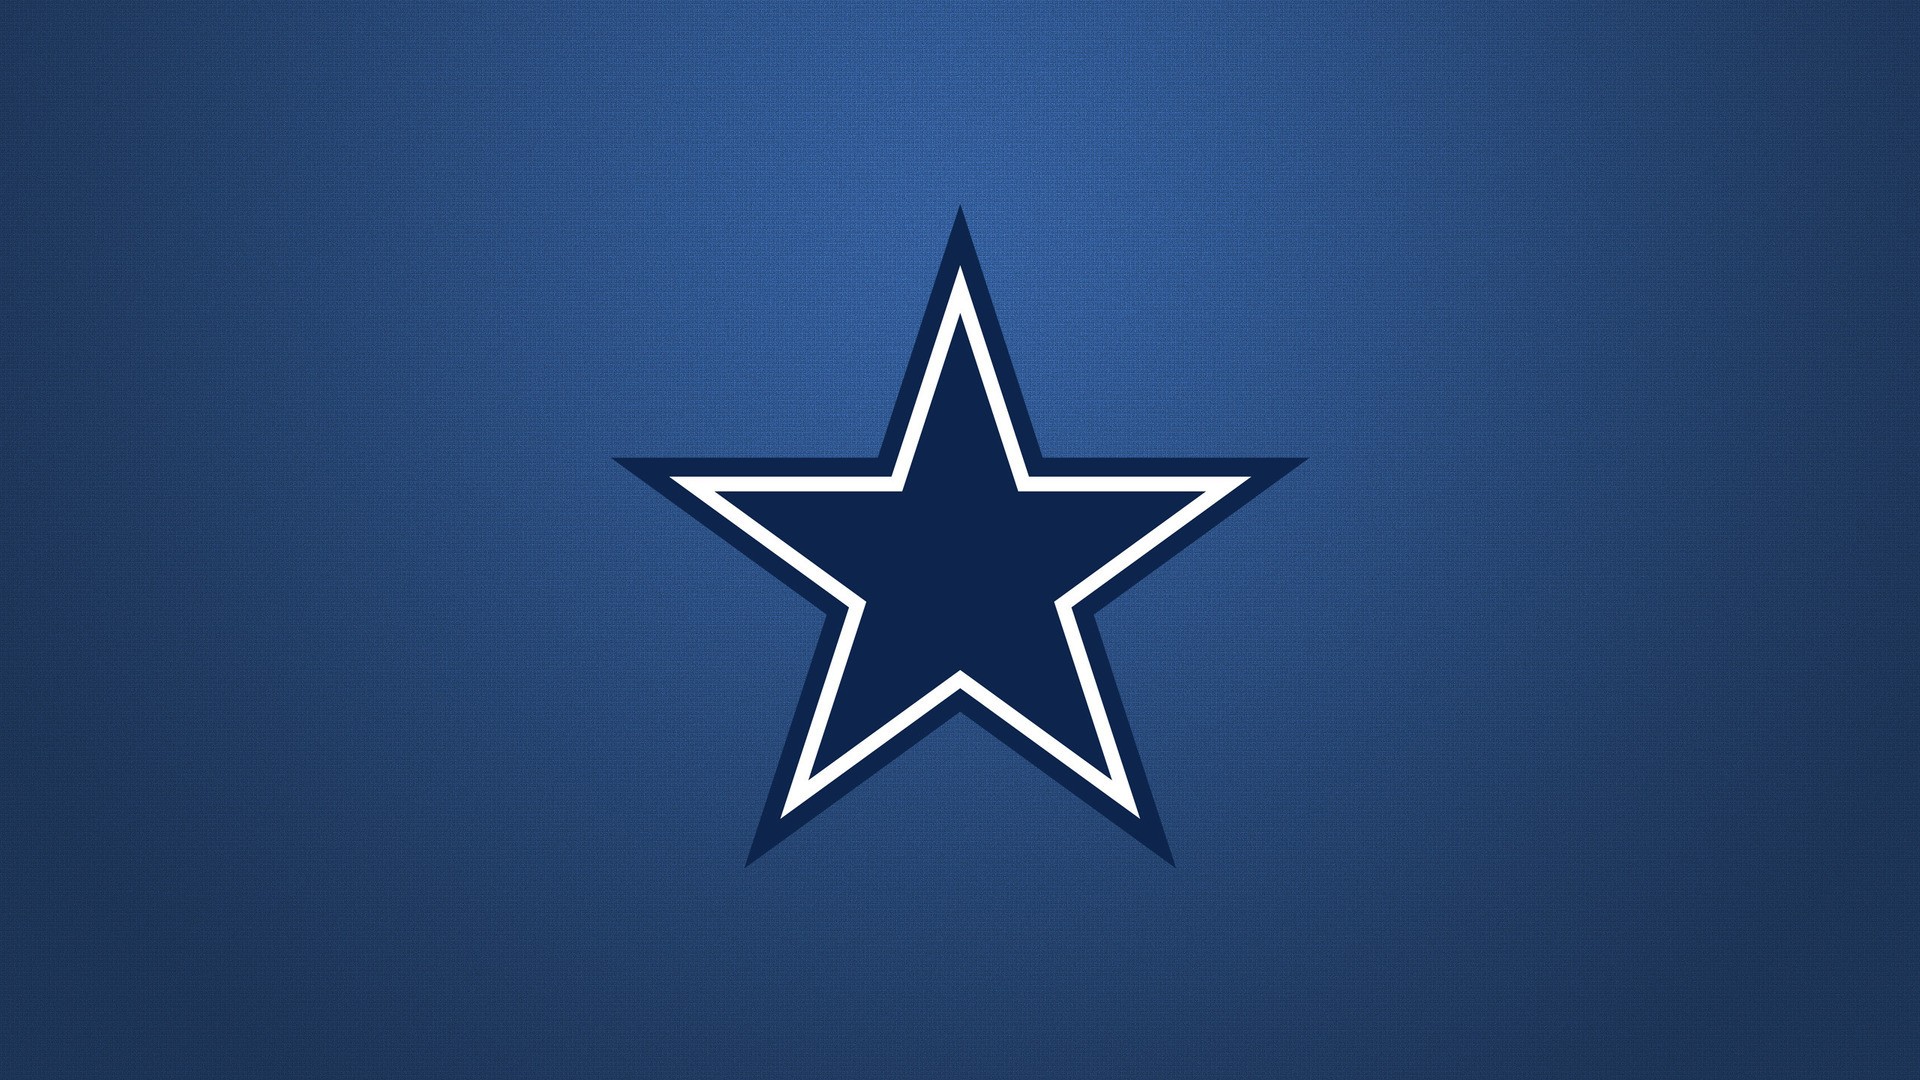 Dallas Cowboys Logo HD Image Sports Nfl Football